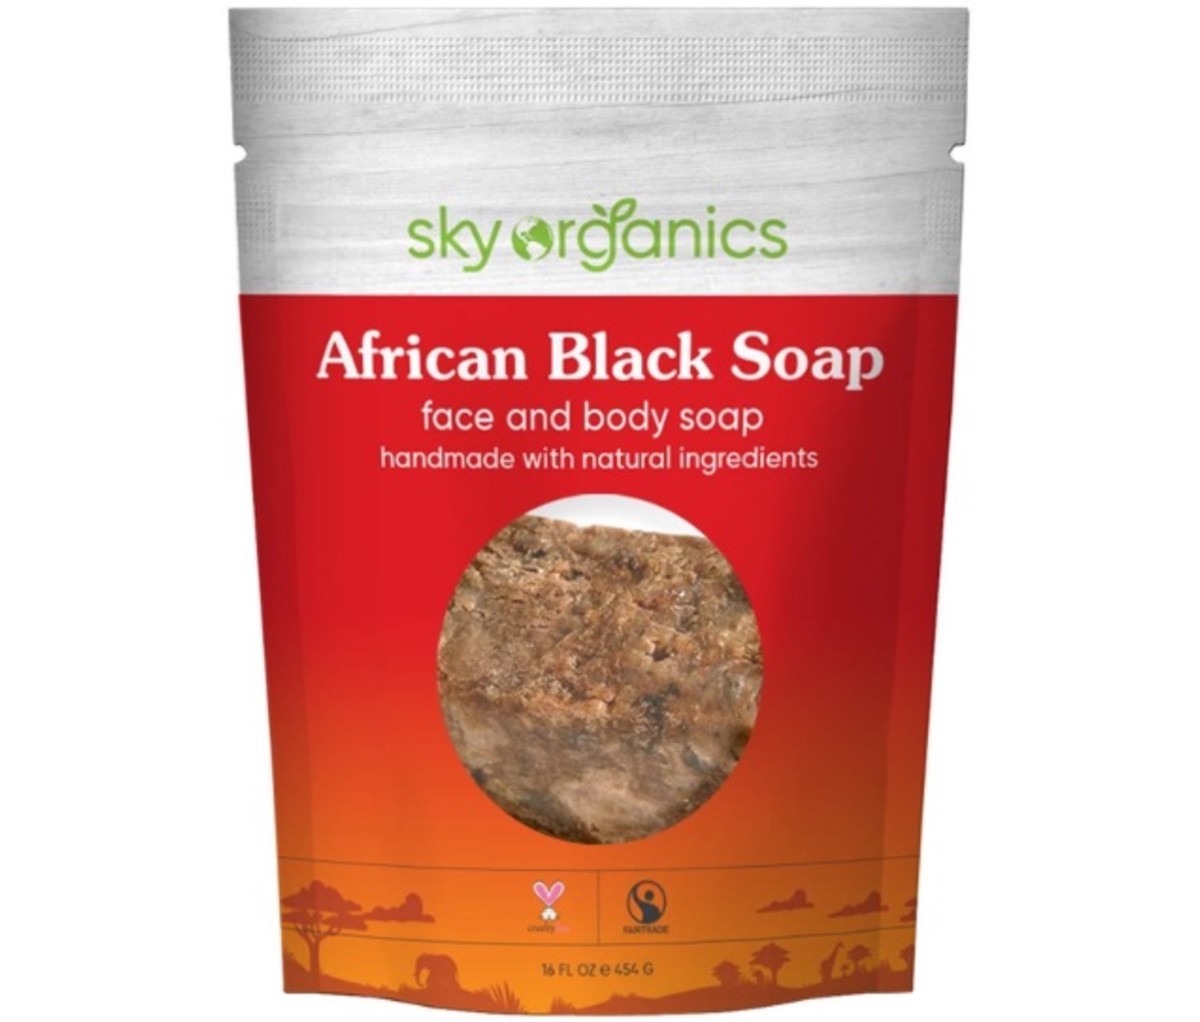 Sky Organics’ African Black Soap